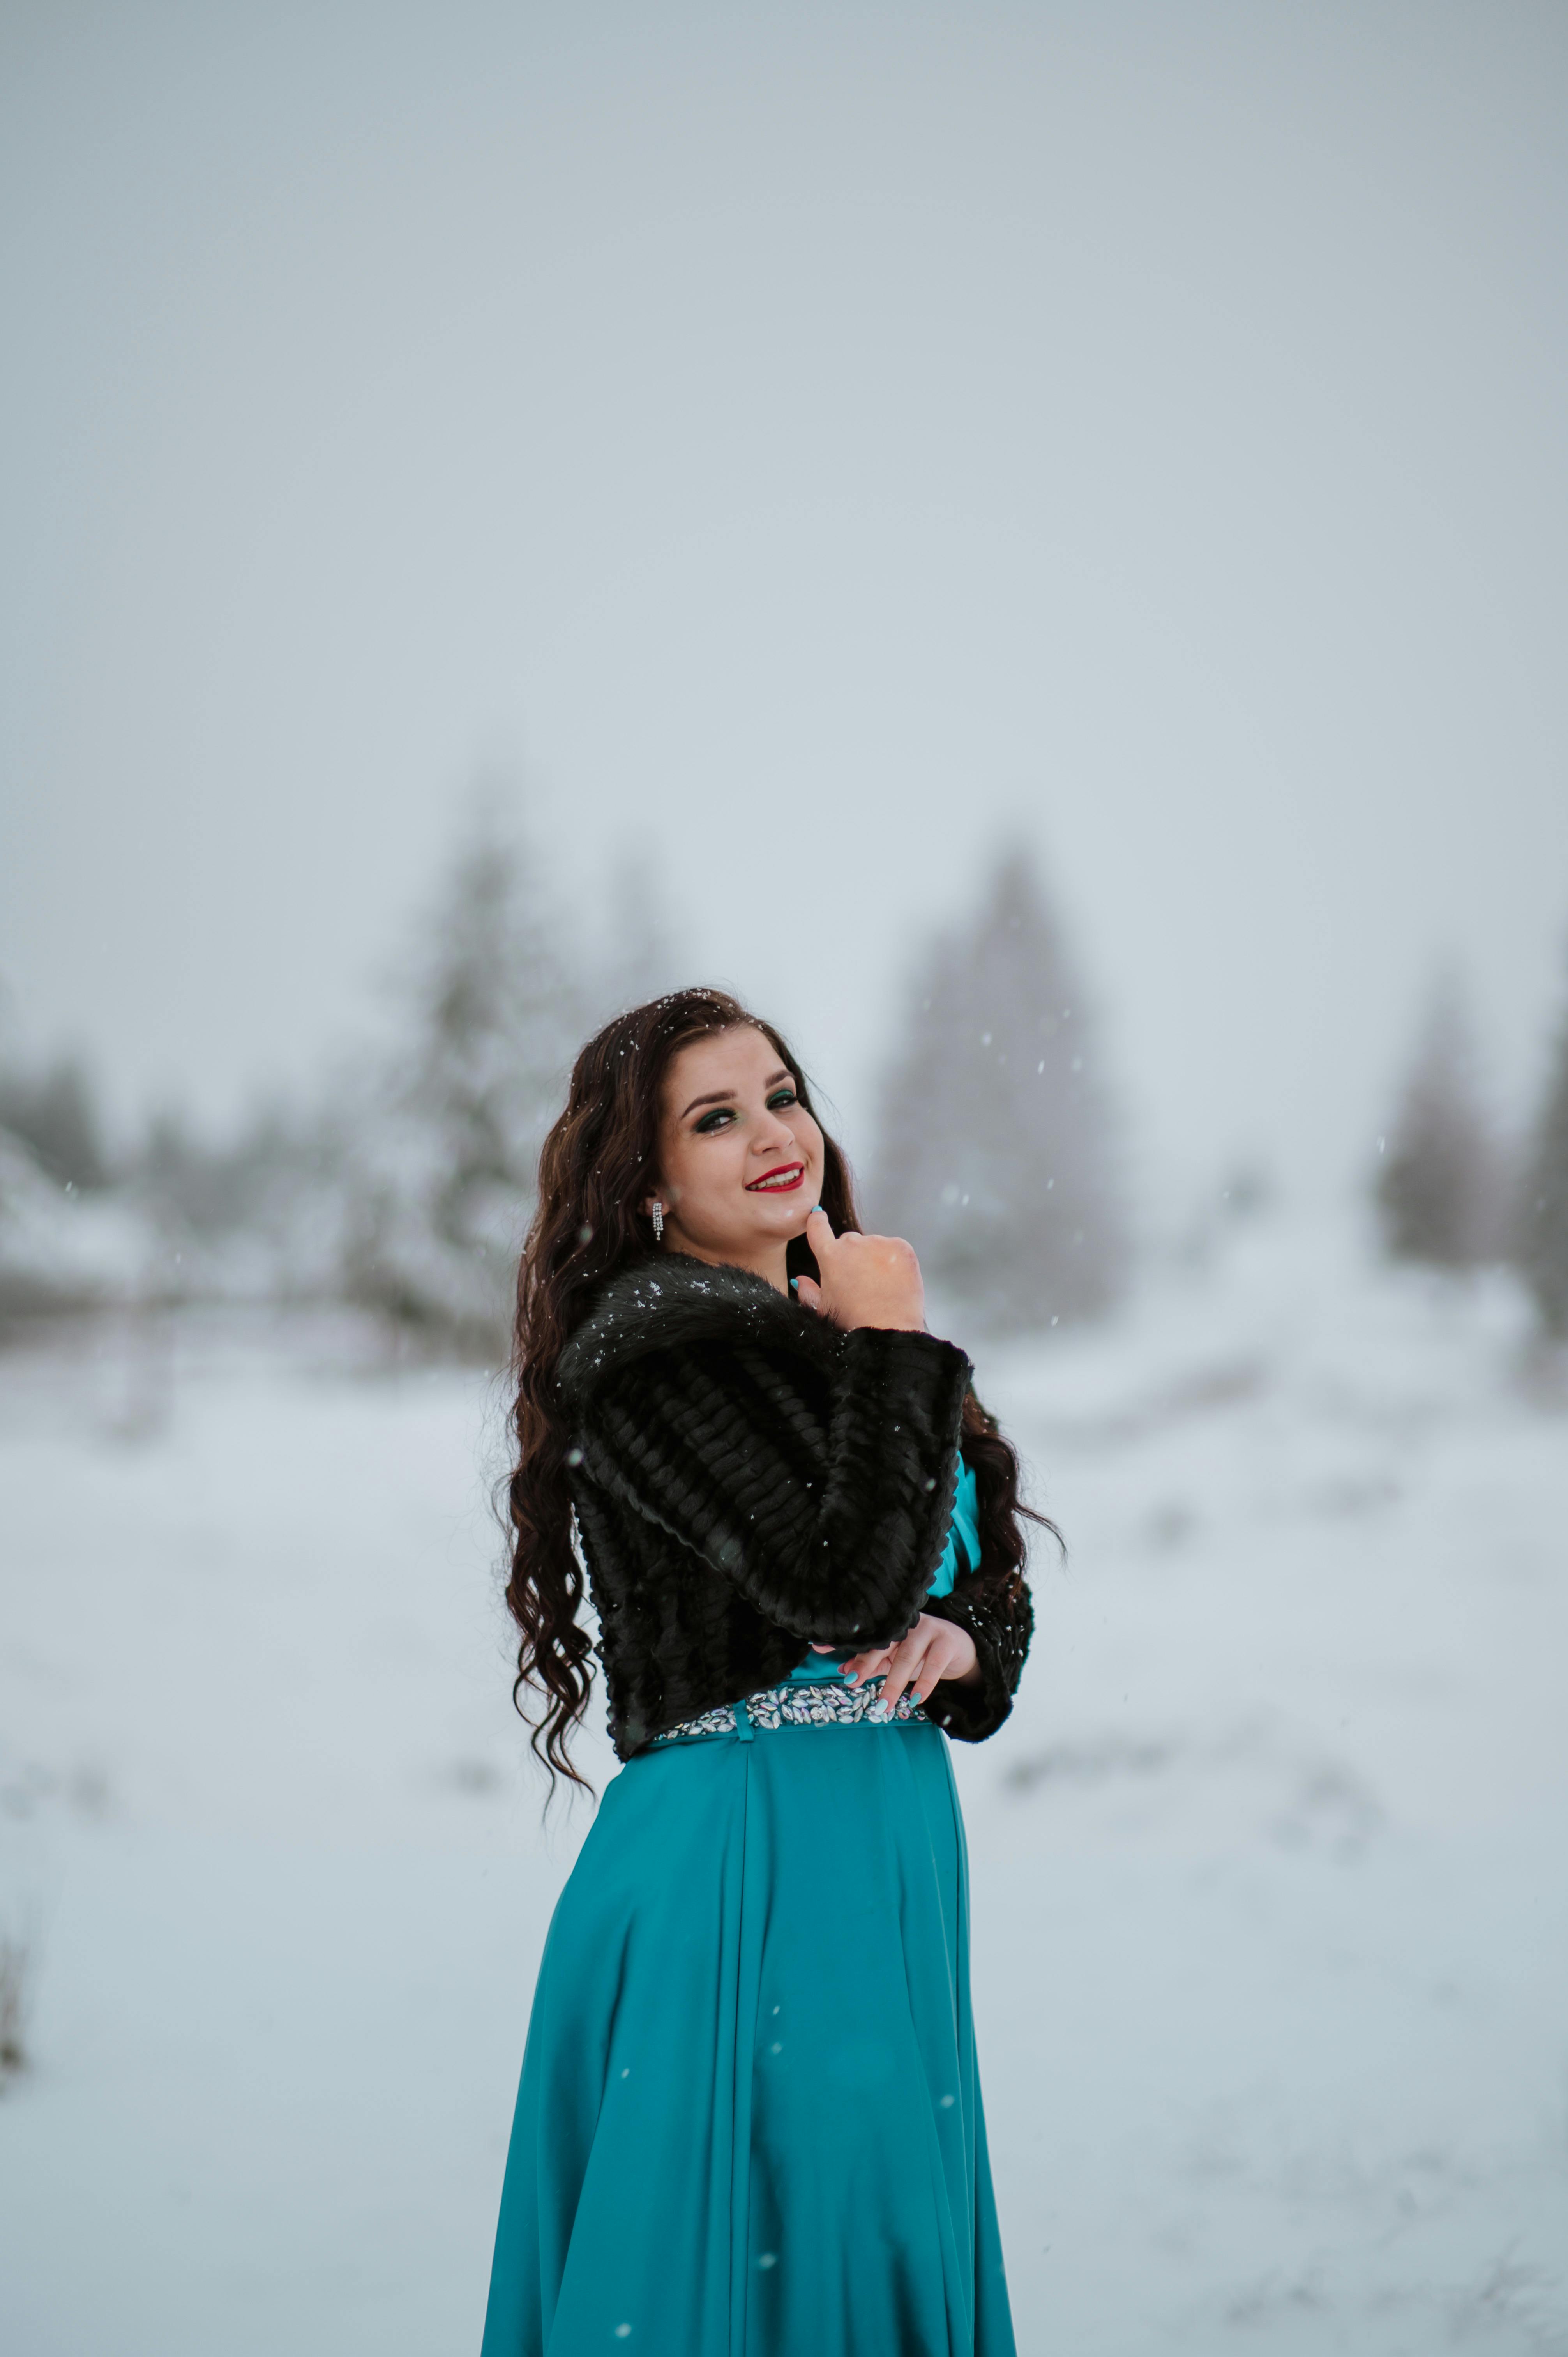 Beautiful Woman Poses Snowy Landscape Stock Photo 794443597 | Shutterstock